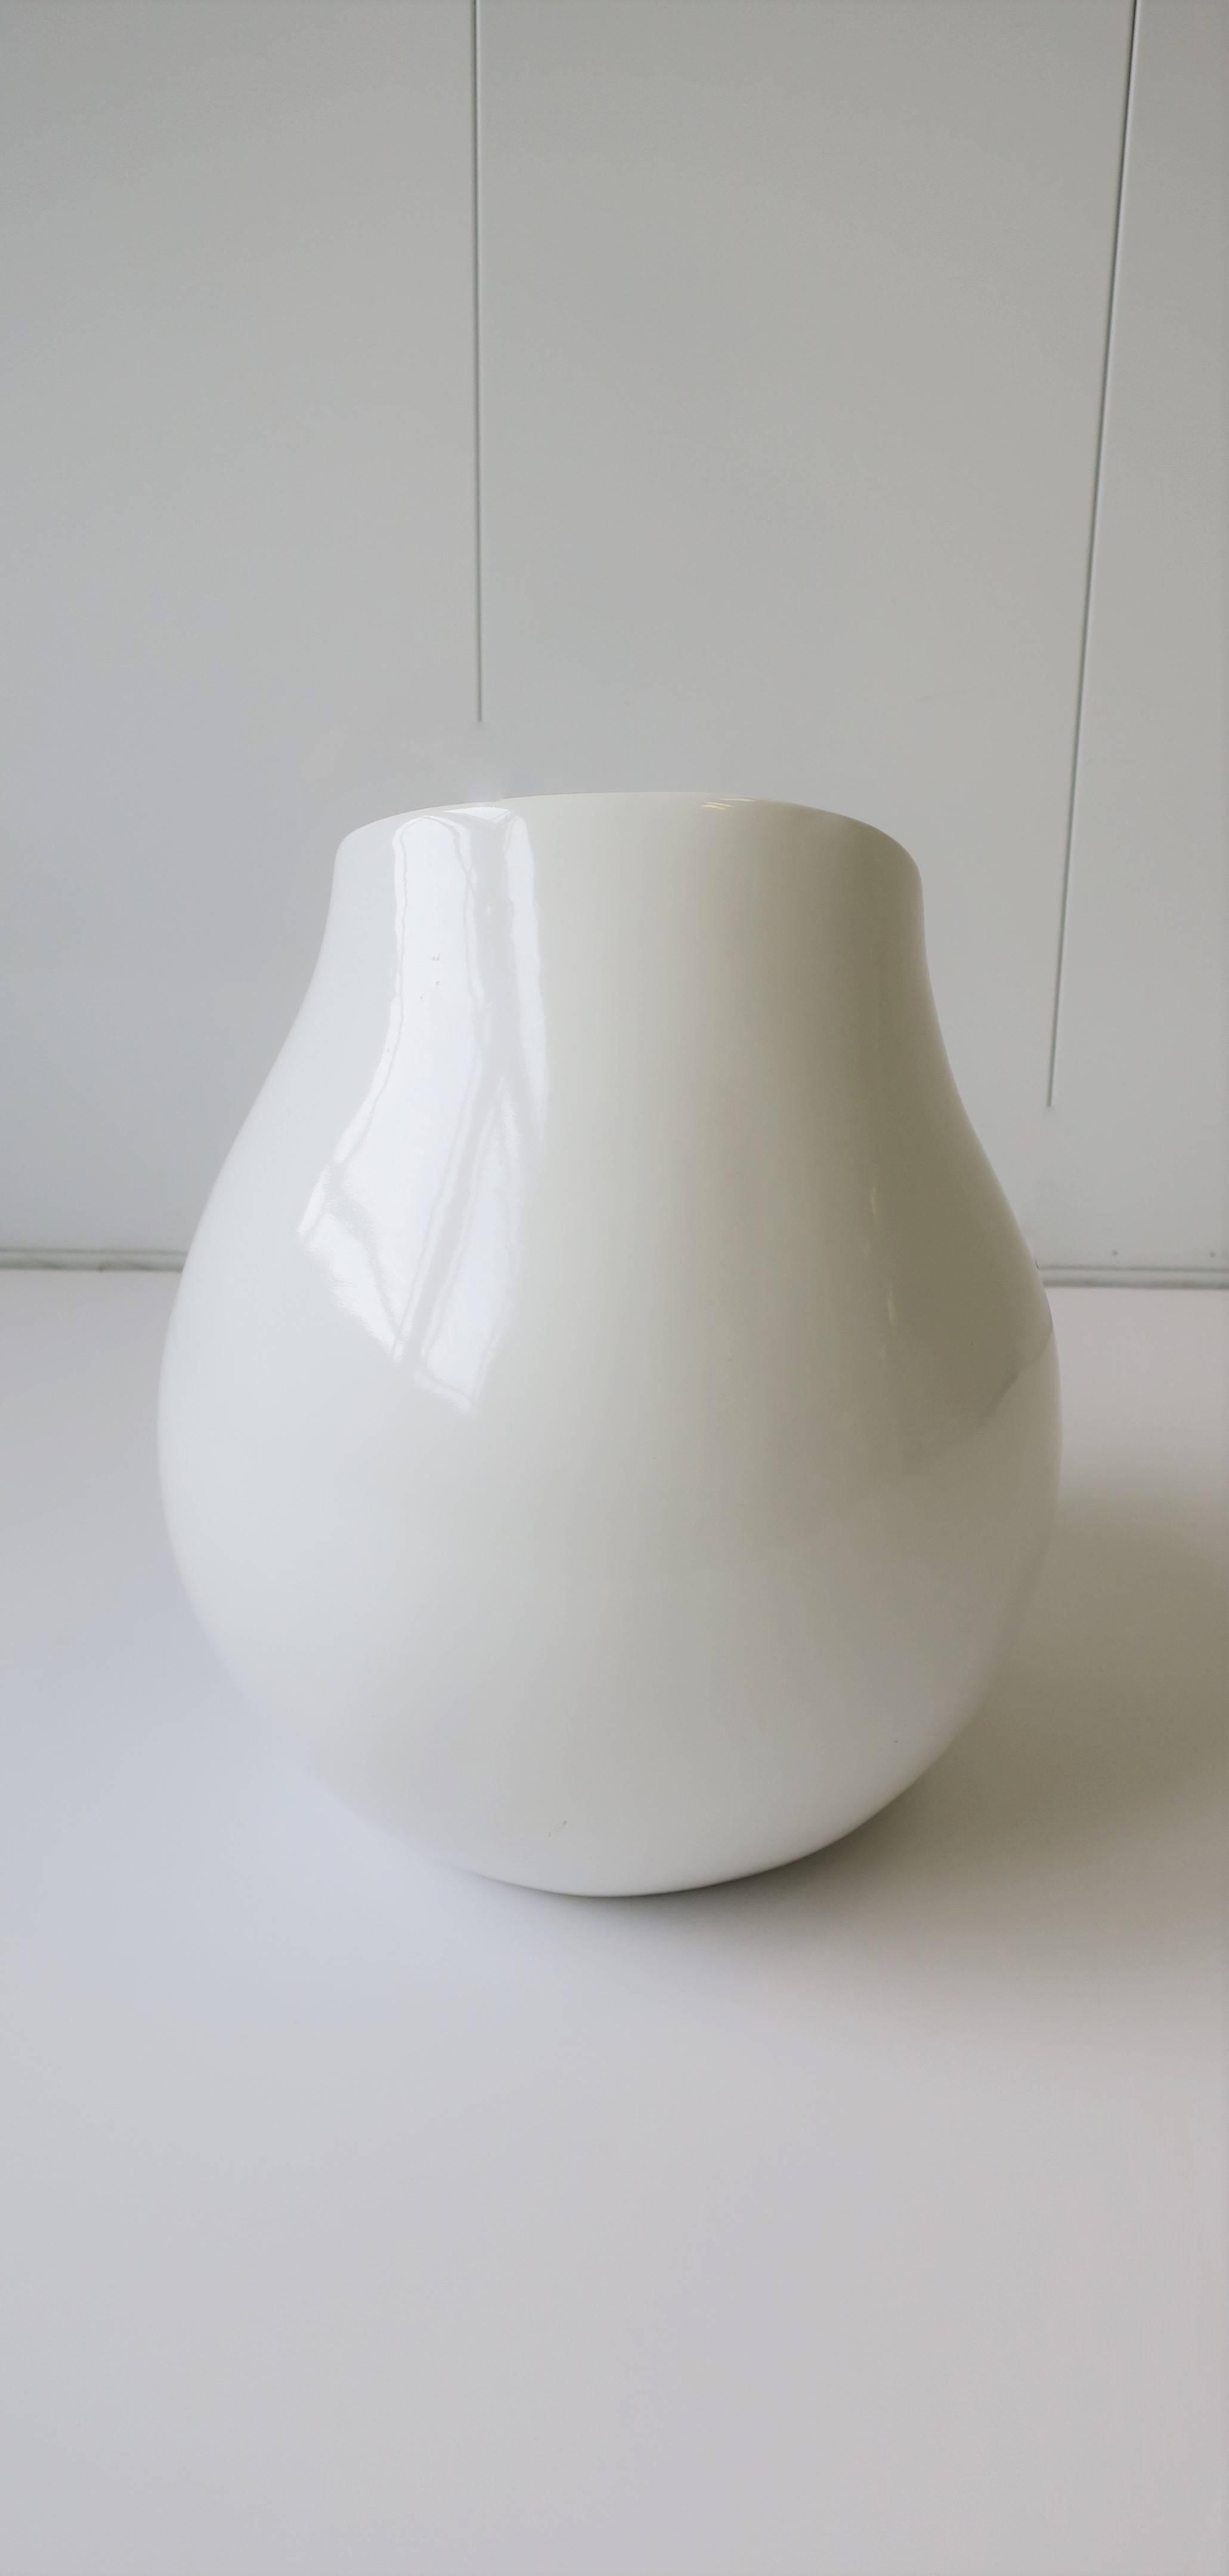 Glazed Italian White Ceramic Nautilus Shell Centrepiece Sculpture